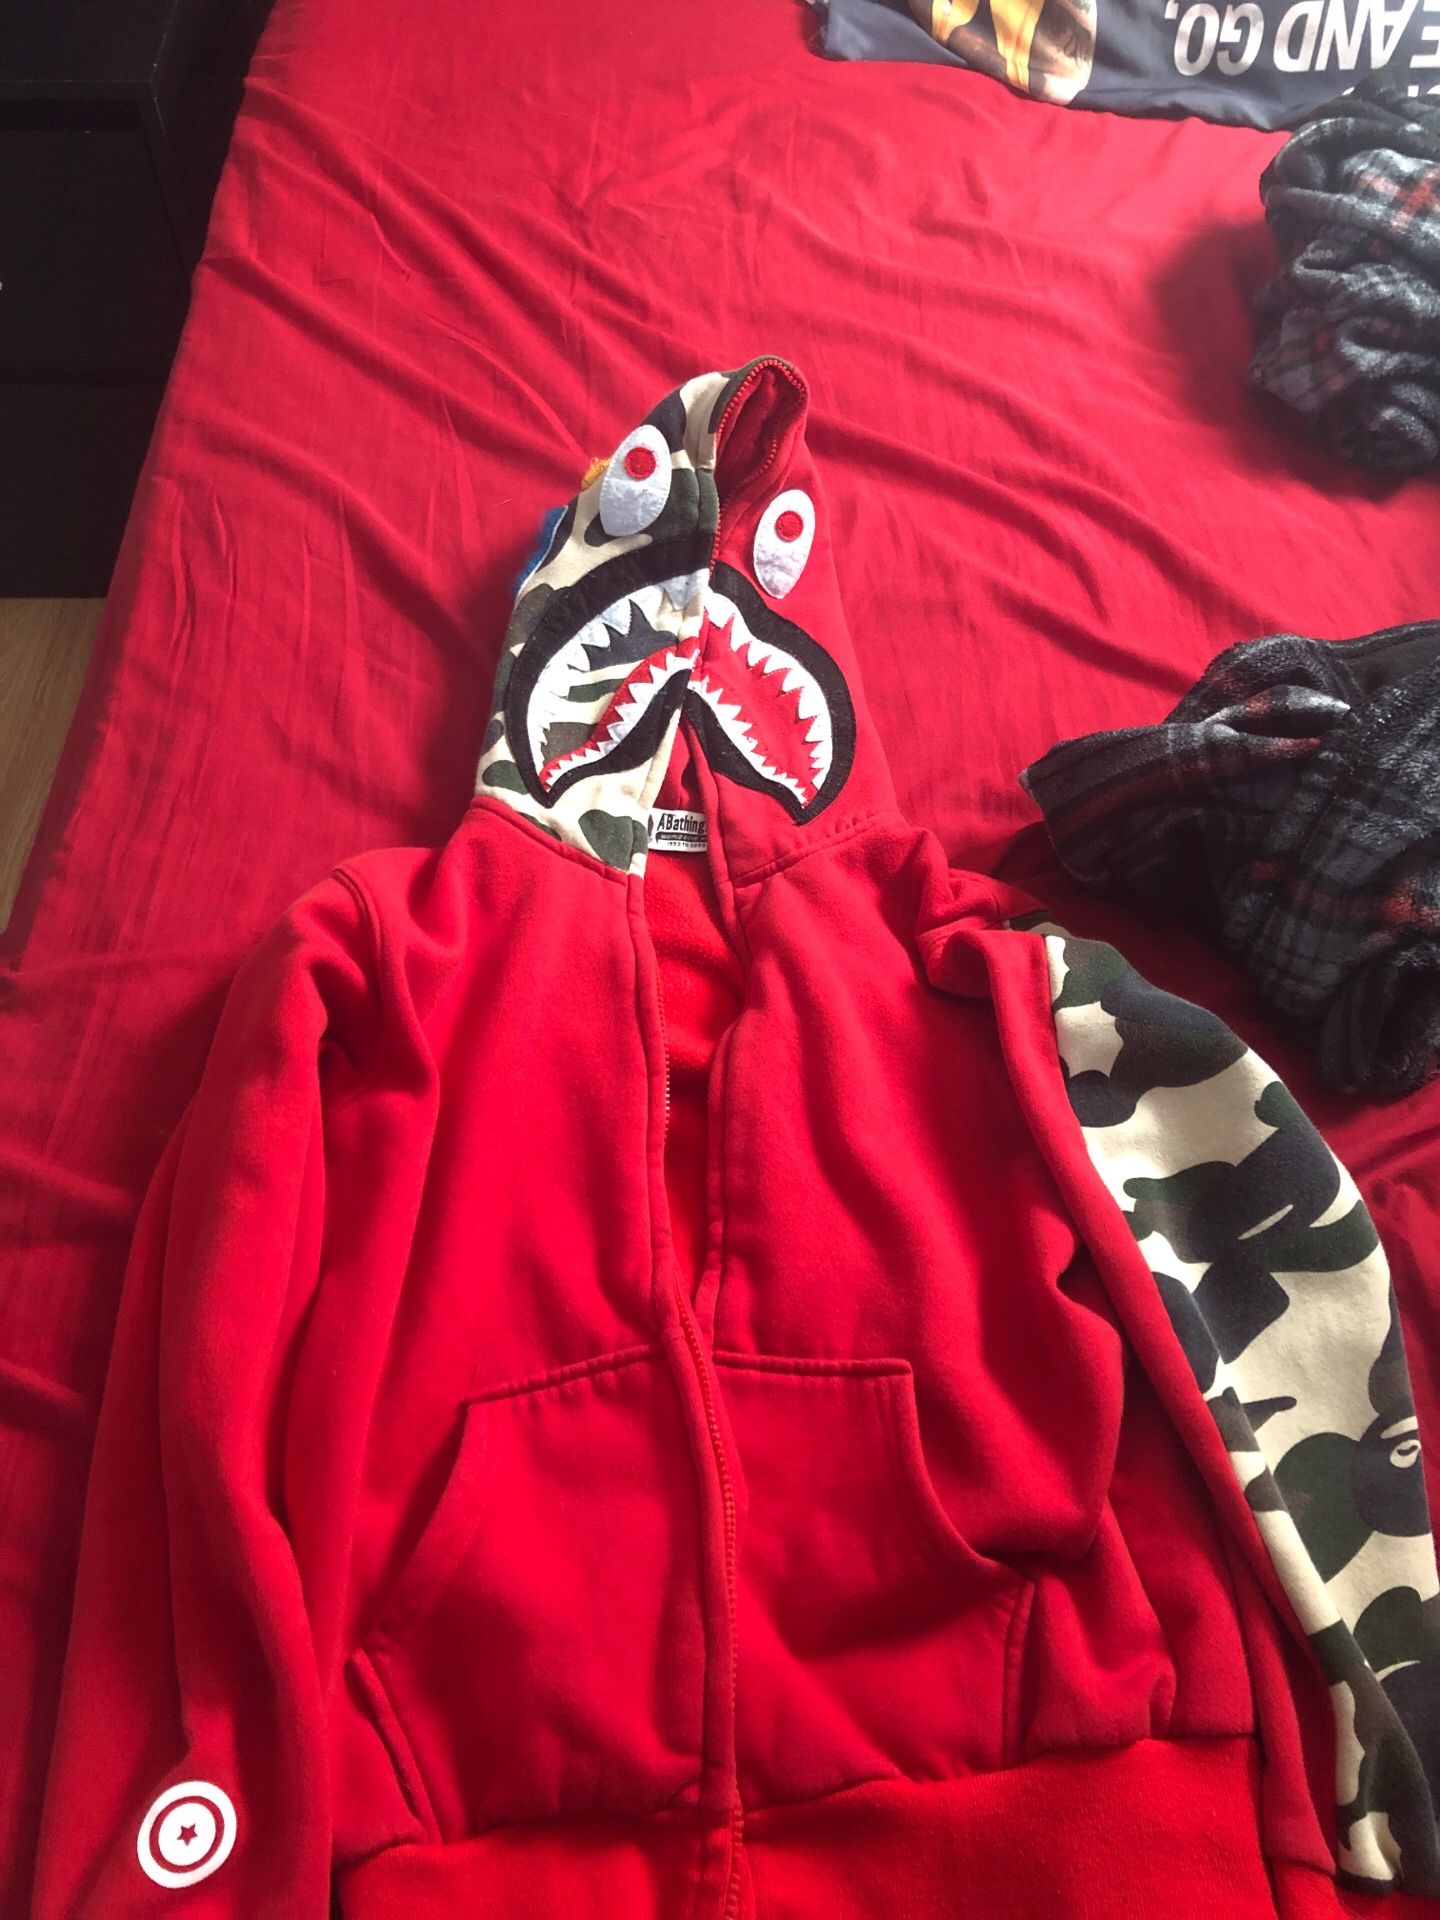 Real Red bape jacket !